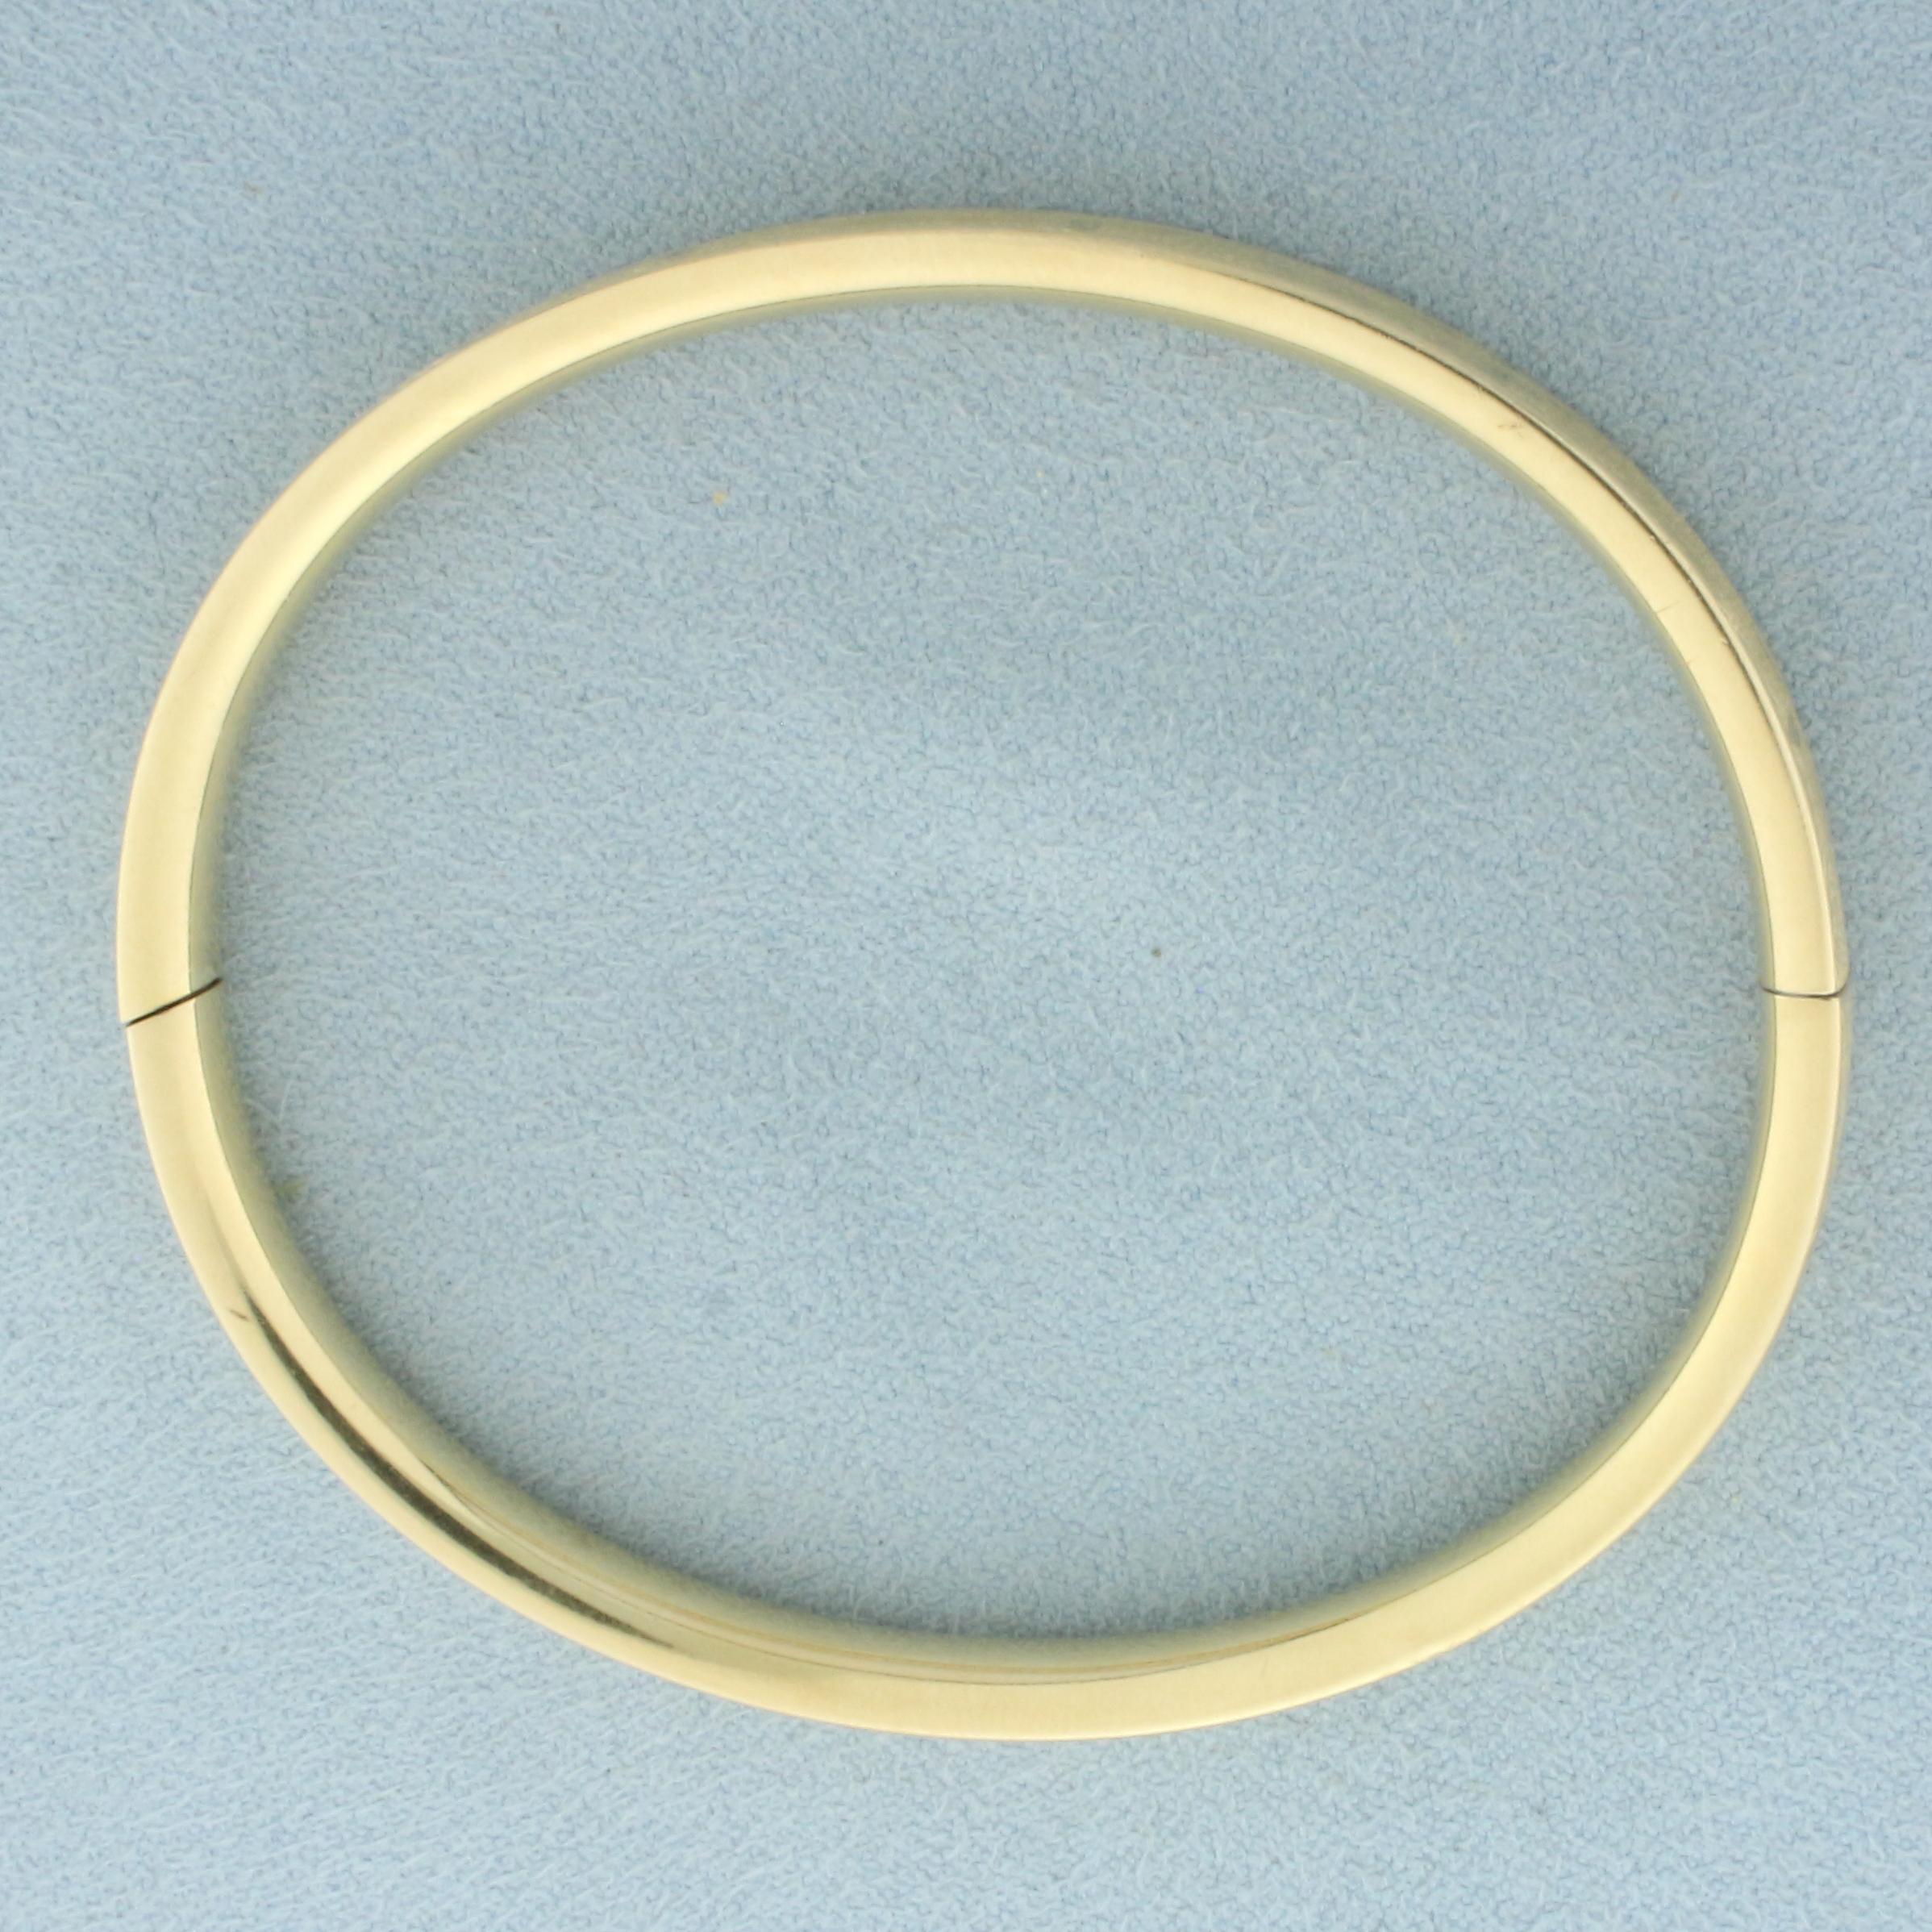 Diamond Cut Bangle Bracelet In 14k Yellow Gold